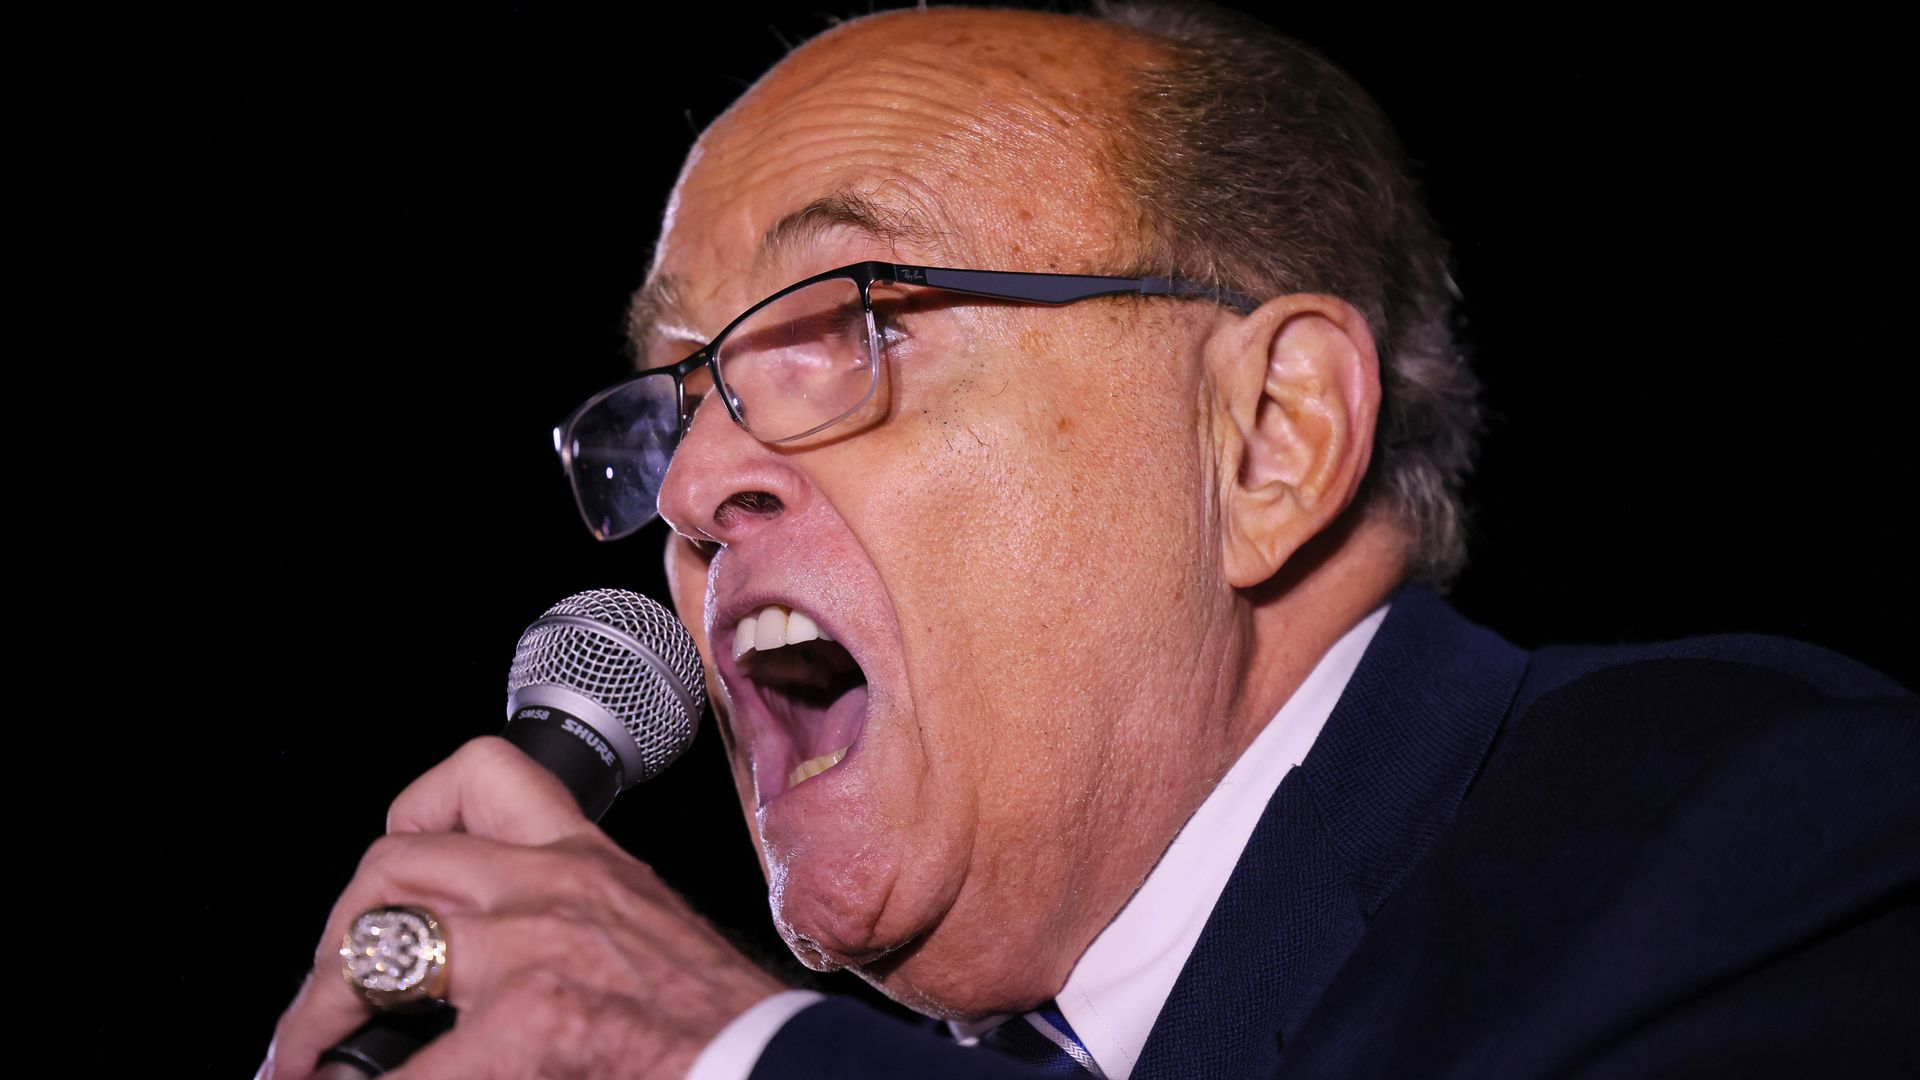 Rudy Giuliani speaks into a microphone